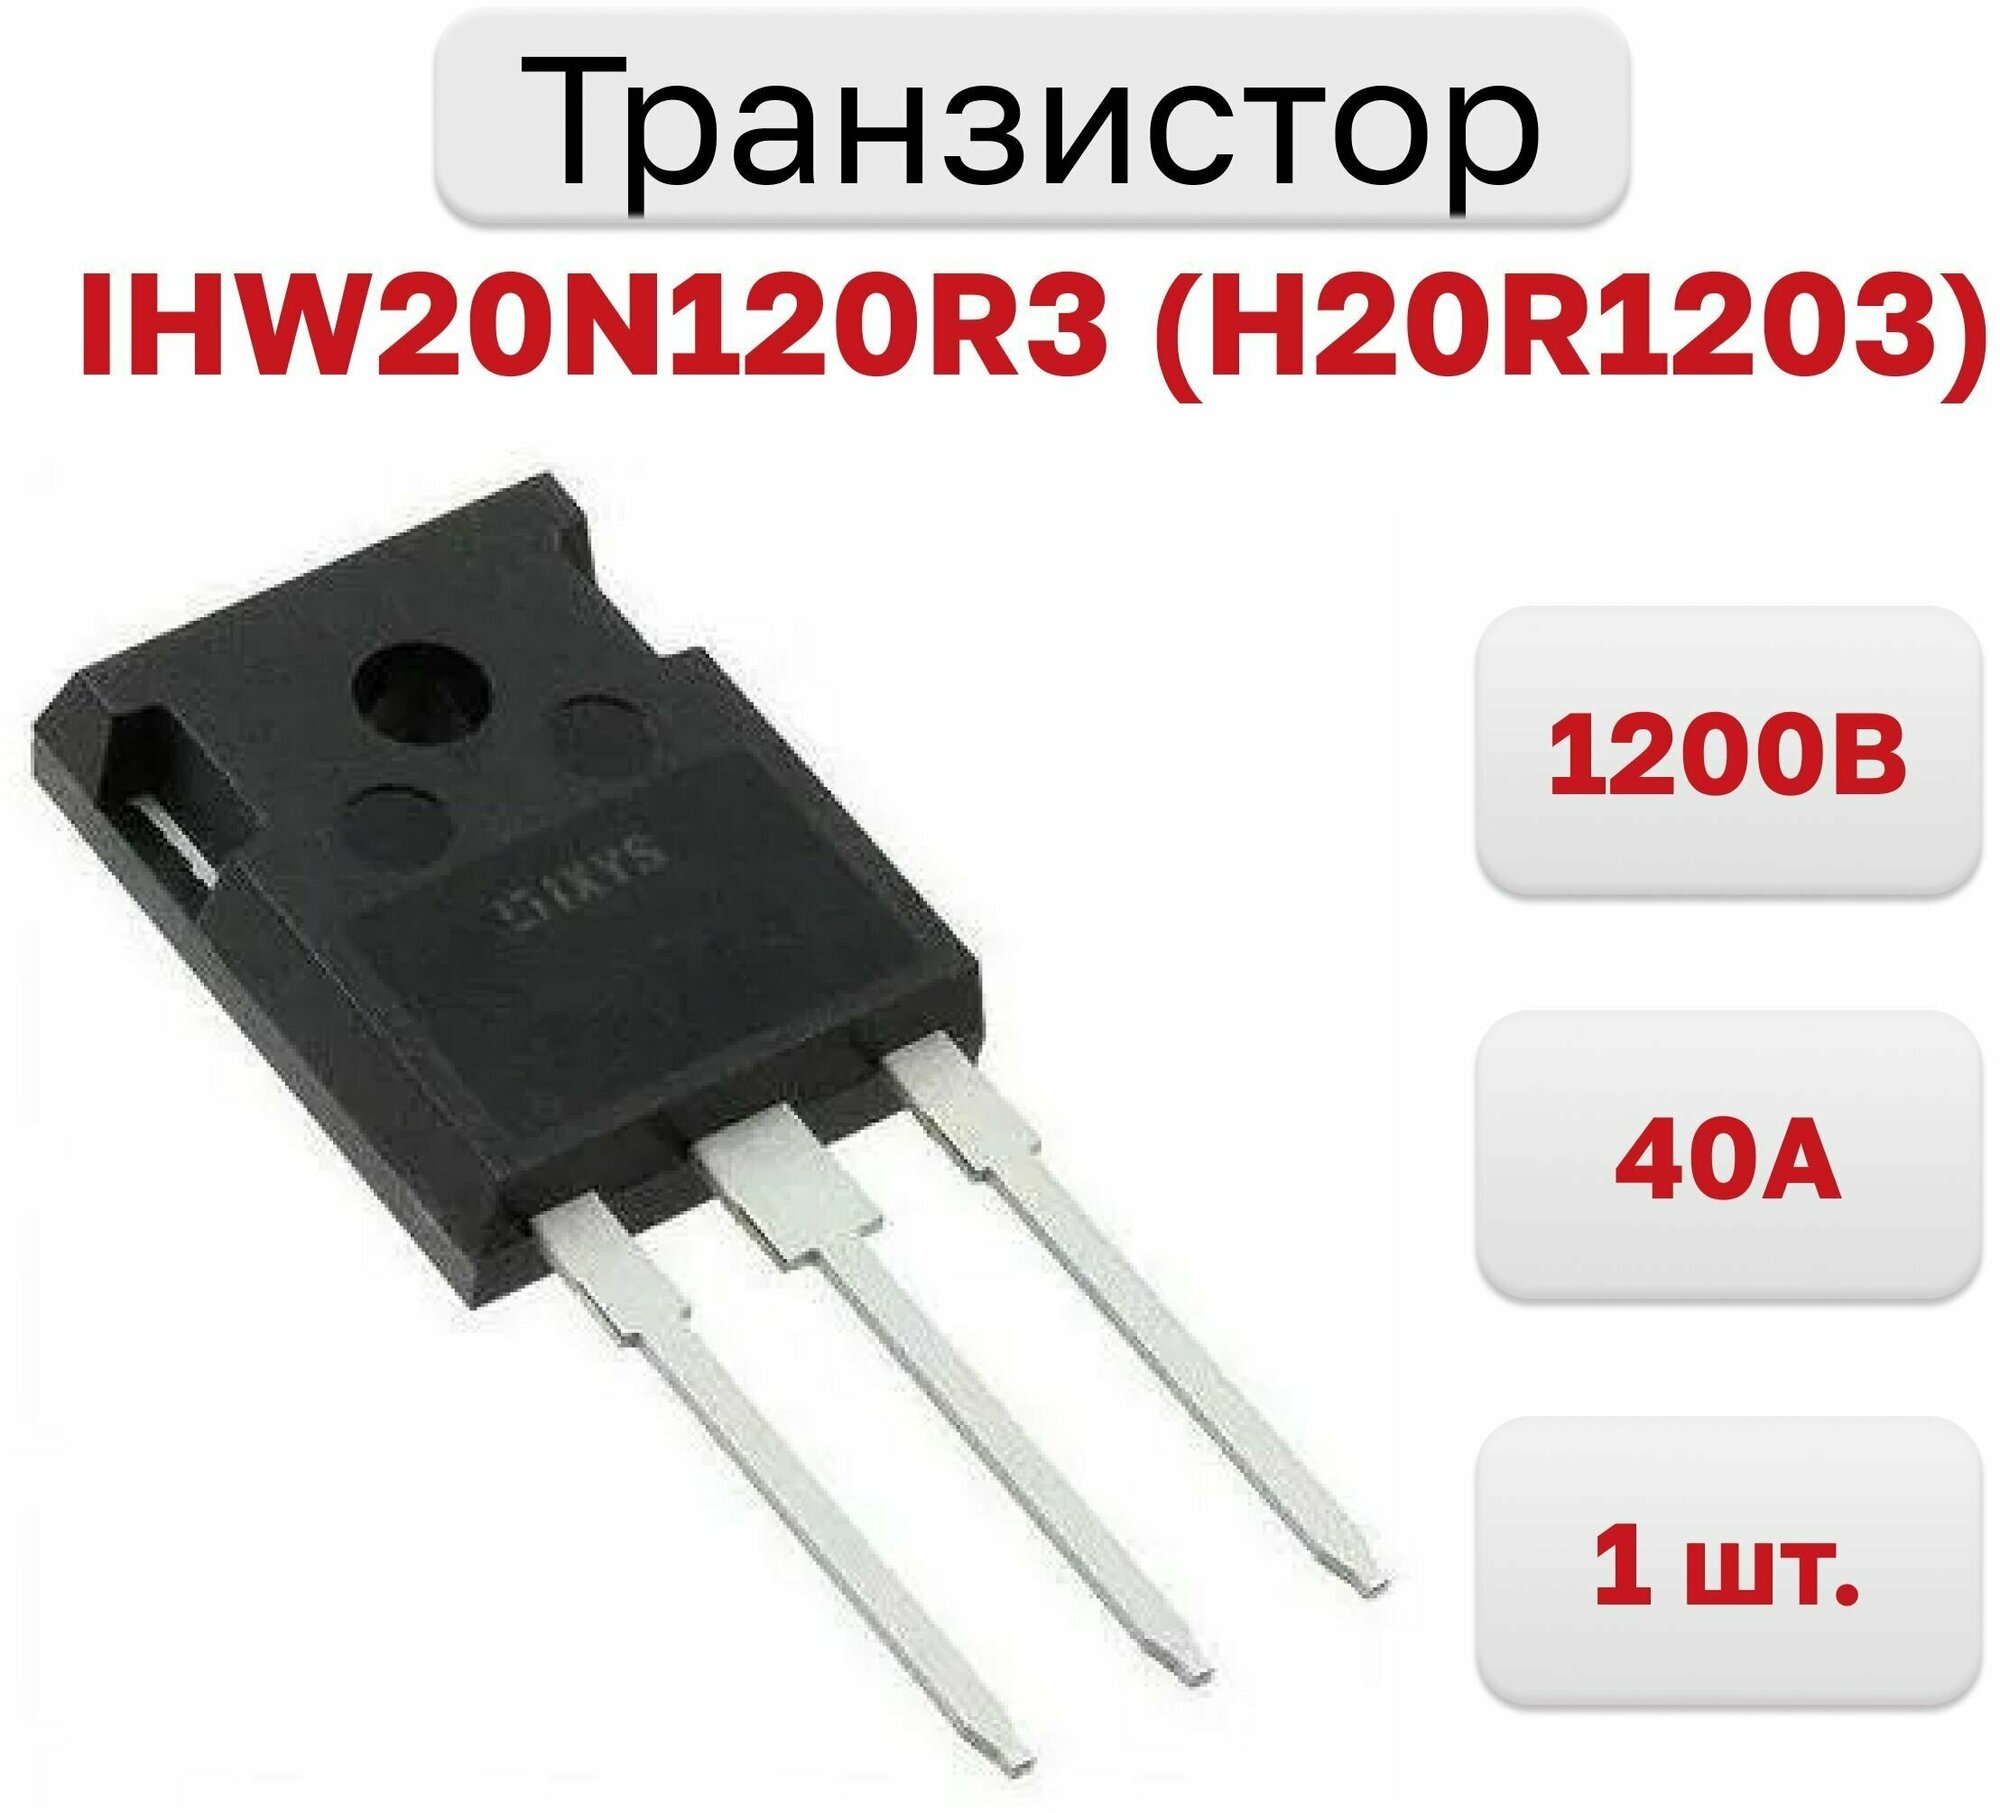 Транзистор IHW20N120R3 (H20R1203) 1200В, 40А TO-247